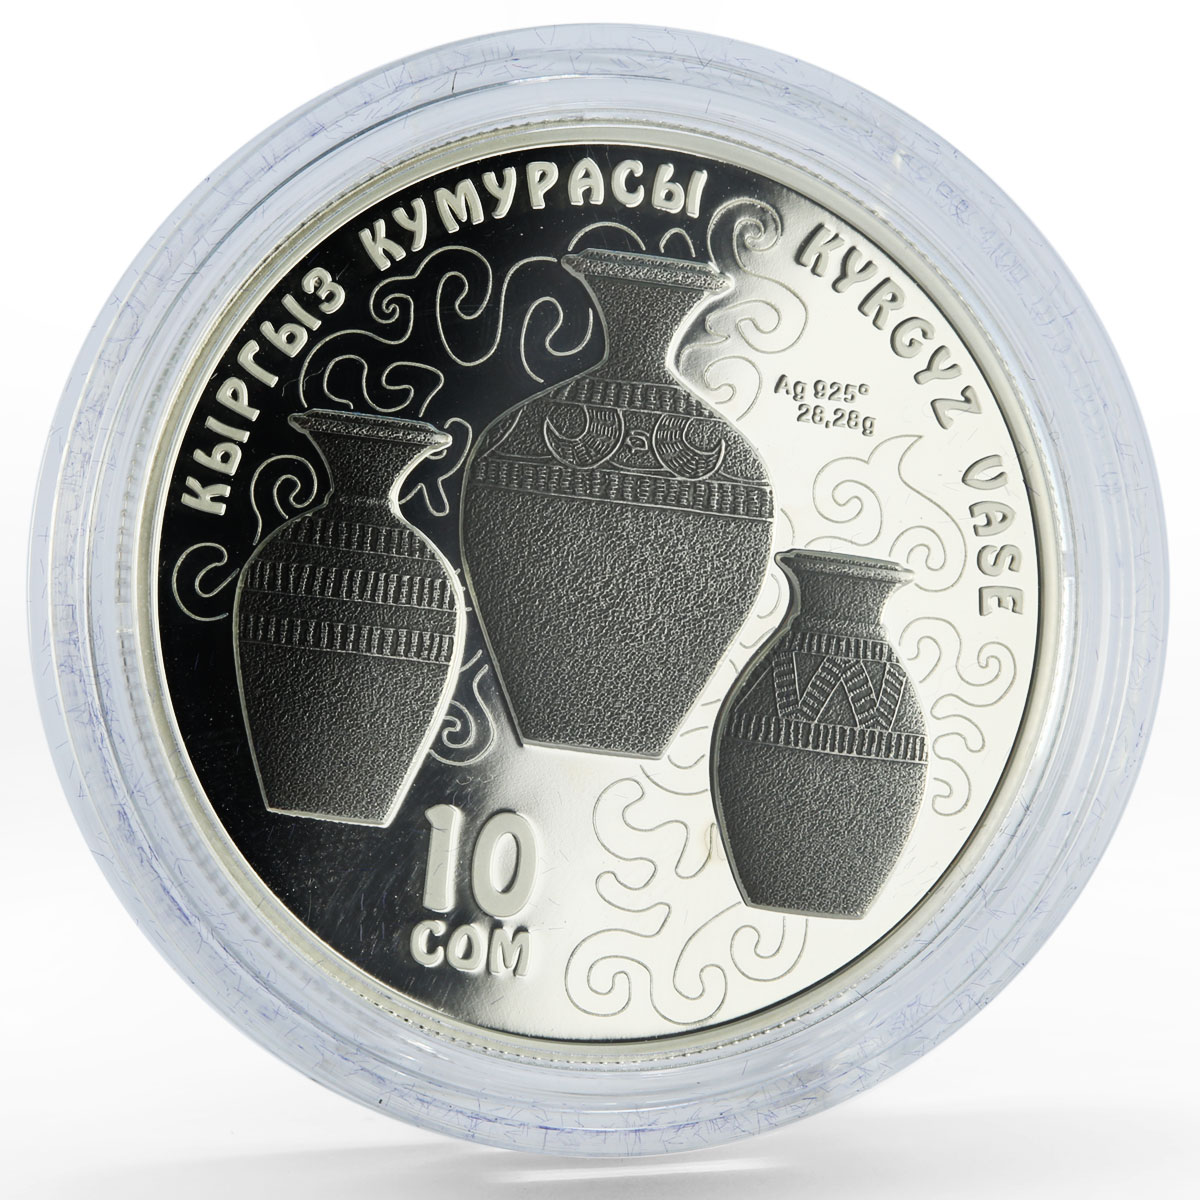 Kyrgyzstan 10 som Age of the Kyrgyz Kaganate Three Vases silver coin 2019